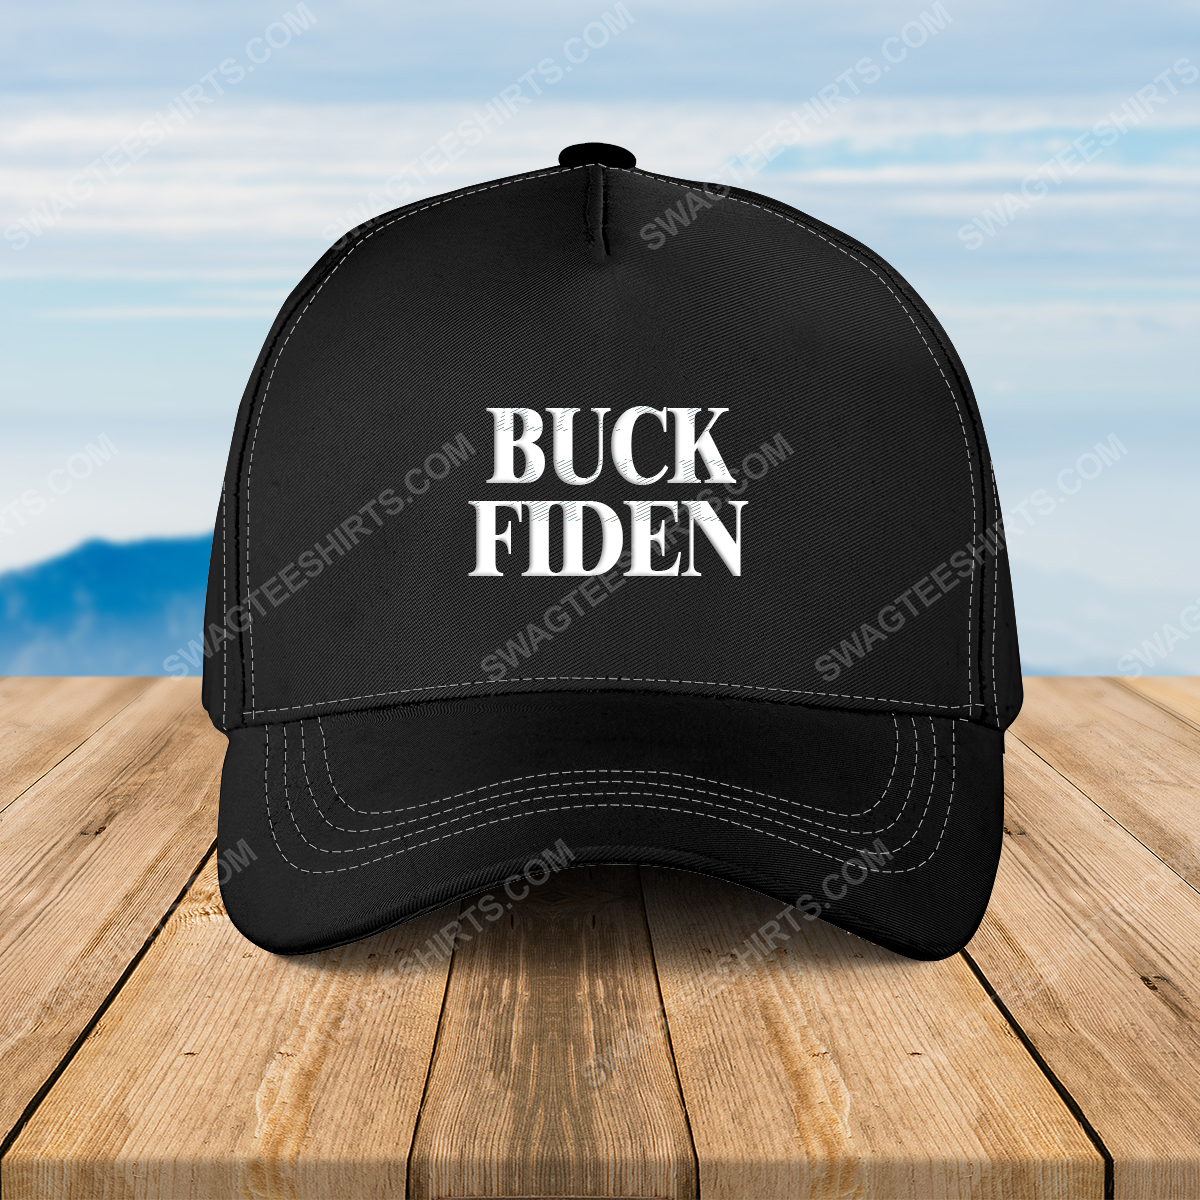 Buck fiden full print classic hat 1 - Copy (2)